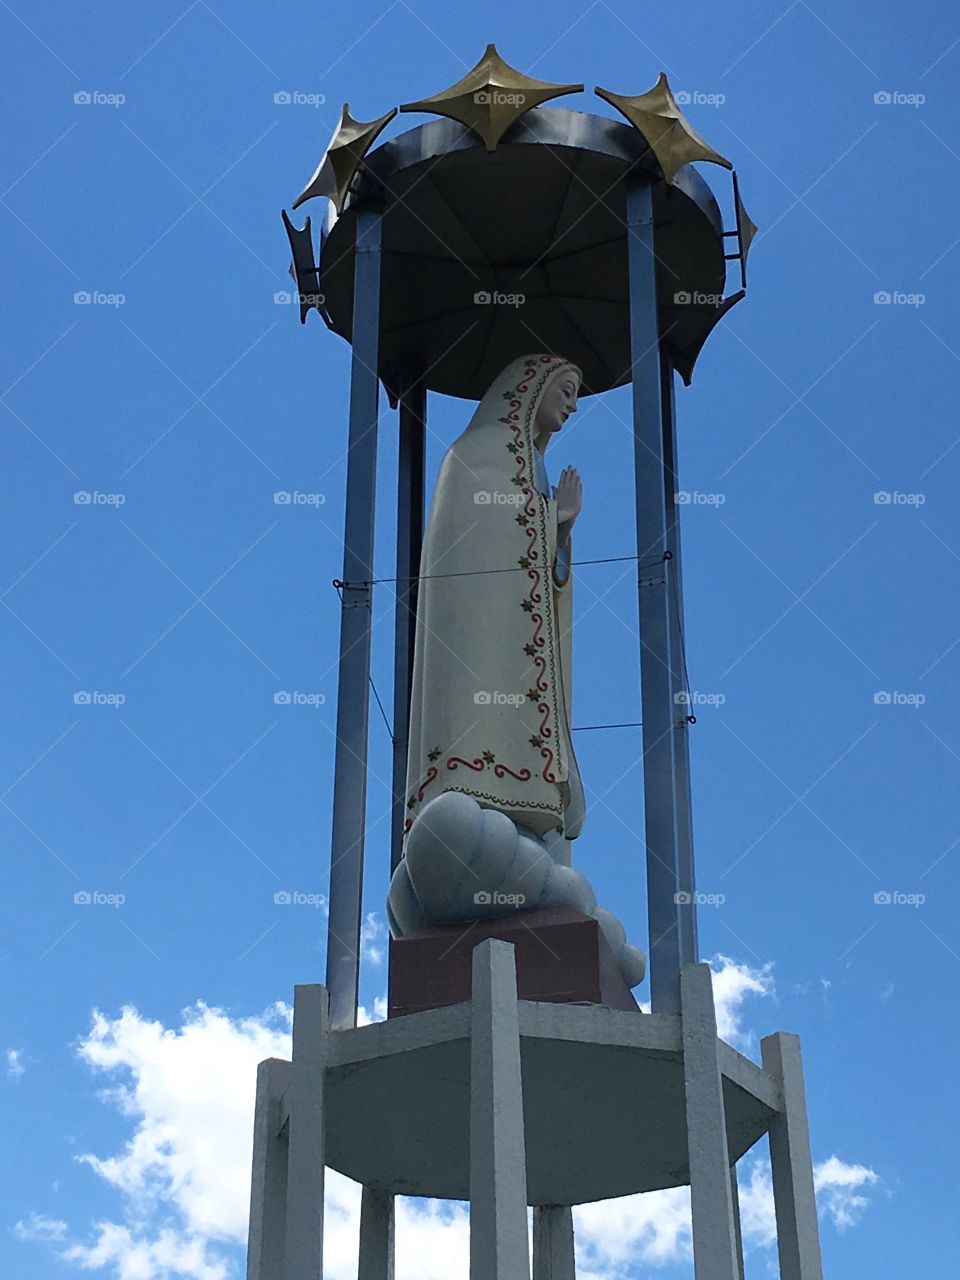 Our lady of Fatima statue at Indian lake Ohio 